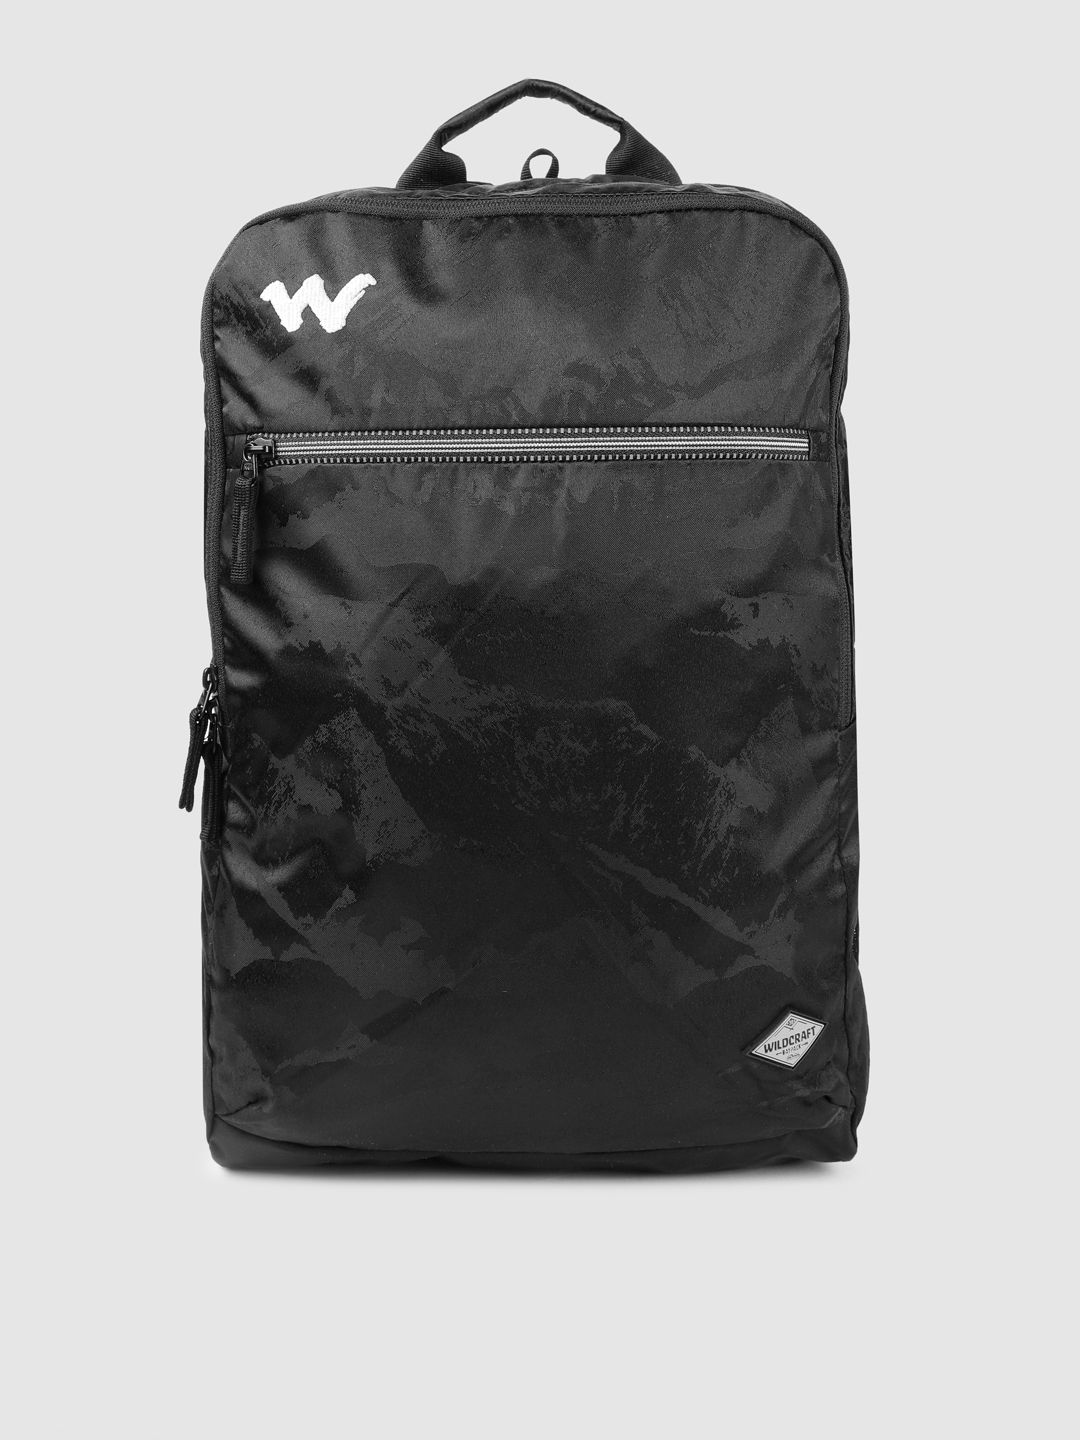 Wildcraft Unisex Black Printed Evo1 Jacq Backpack Price in India